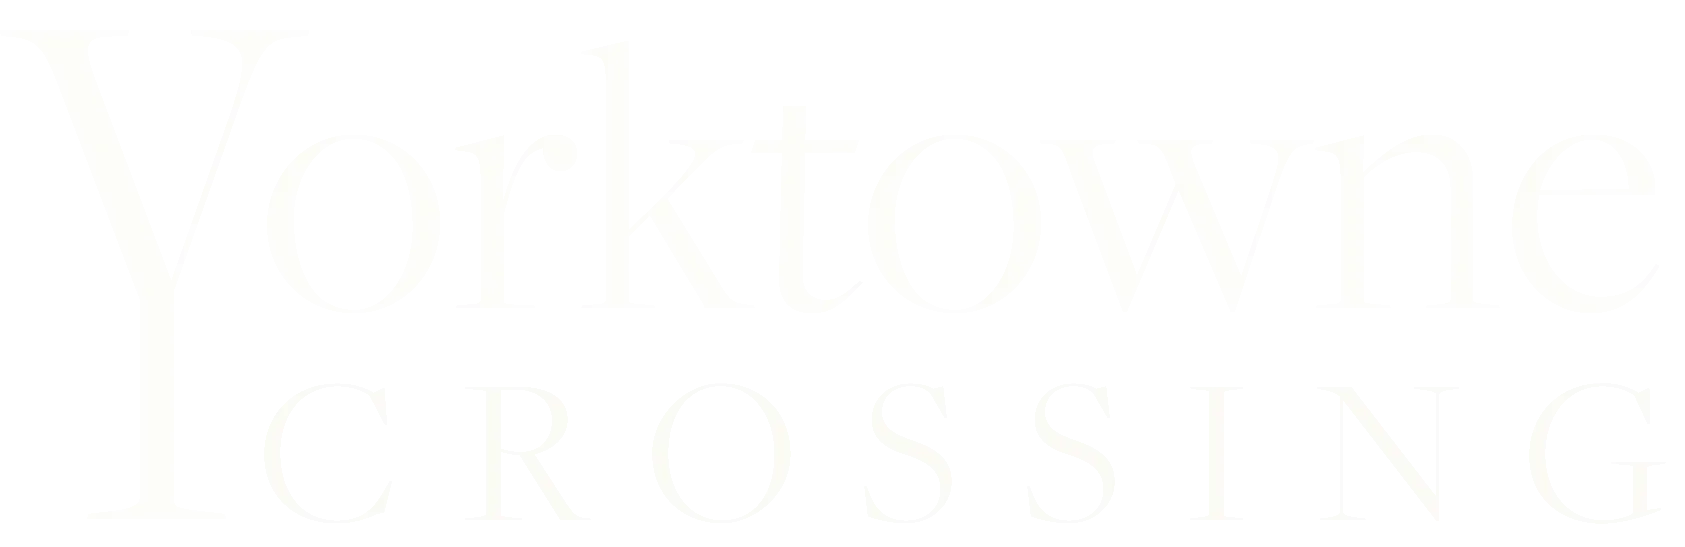 yorktowne crossing logo